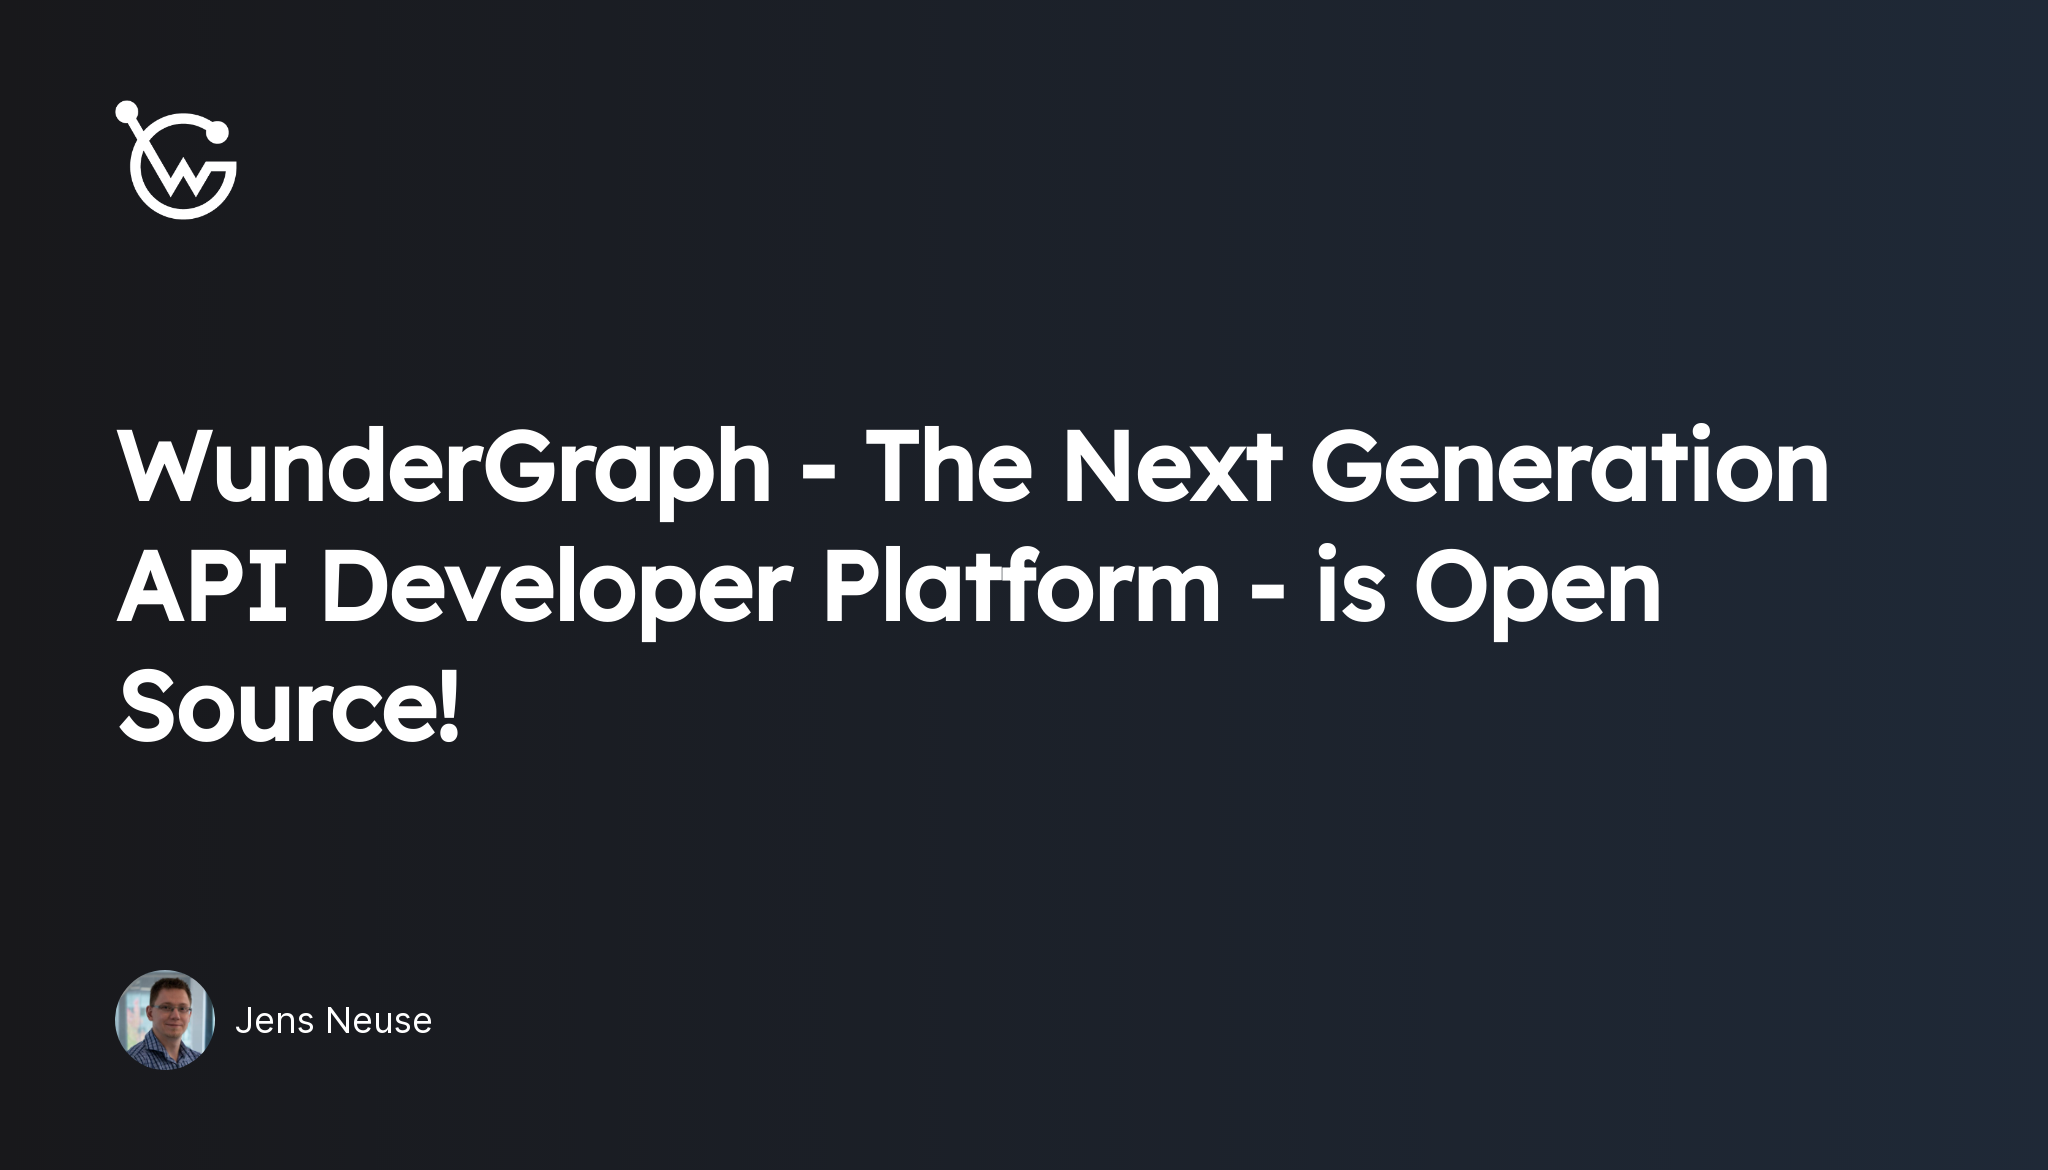 WunderGraph - The Next Generation API Developer Platform - is Open Source!